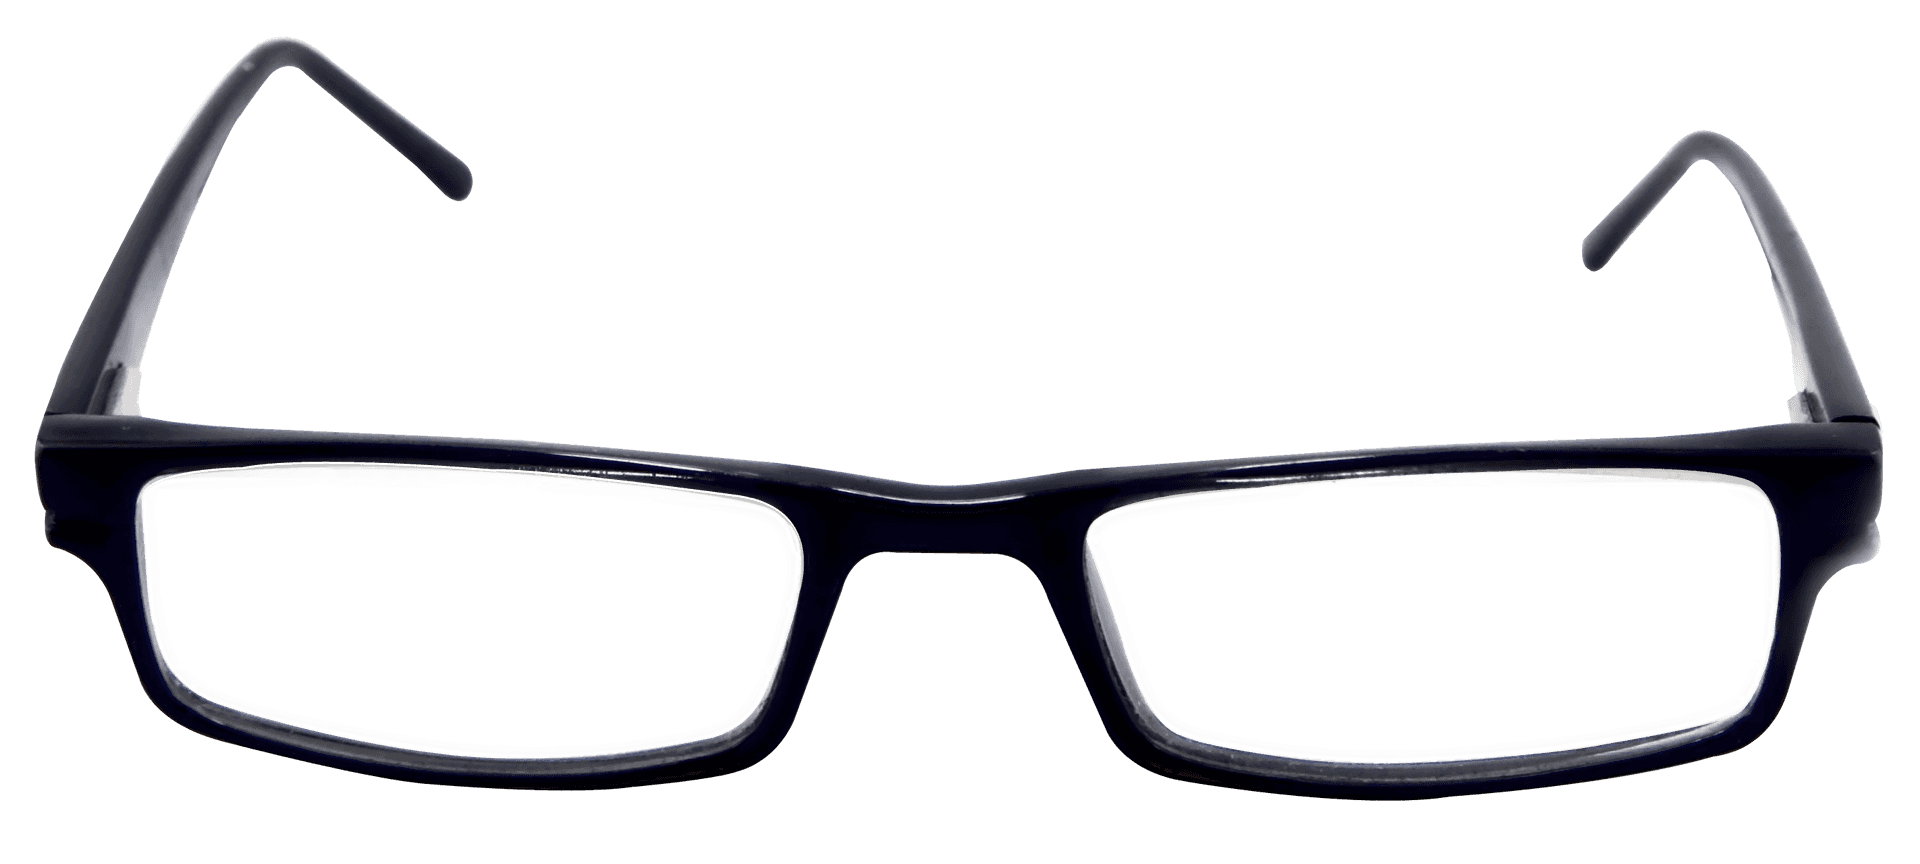 Black Frame Eyeglasses Isolated PNG image